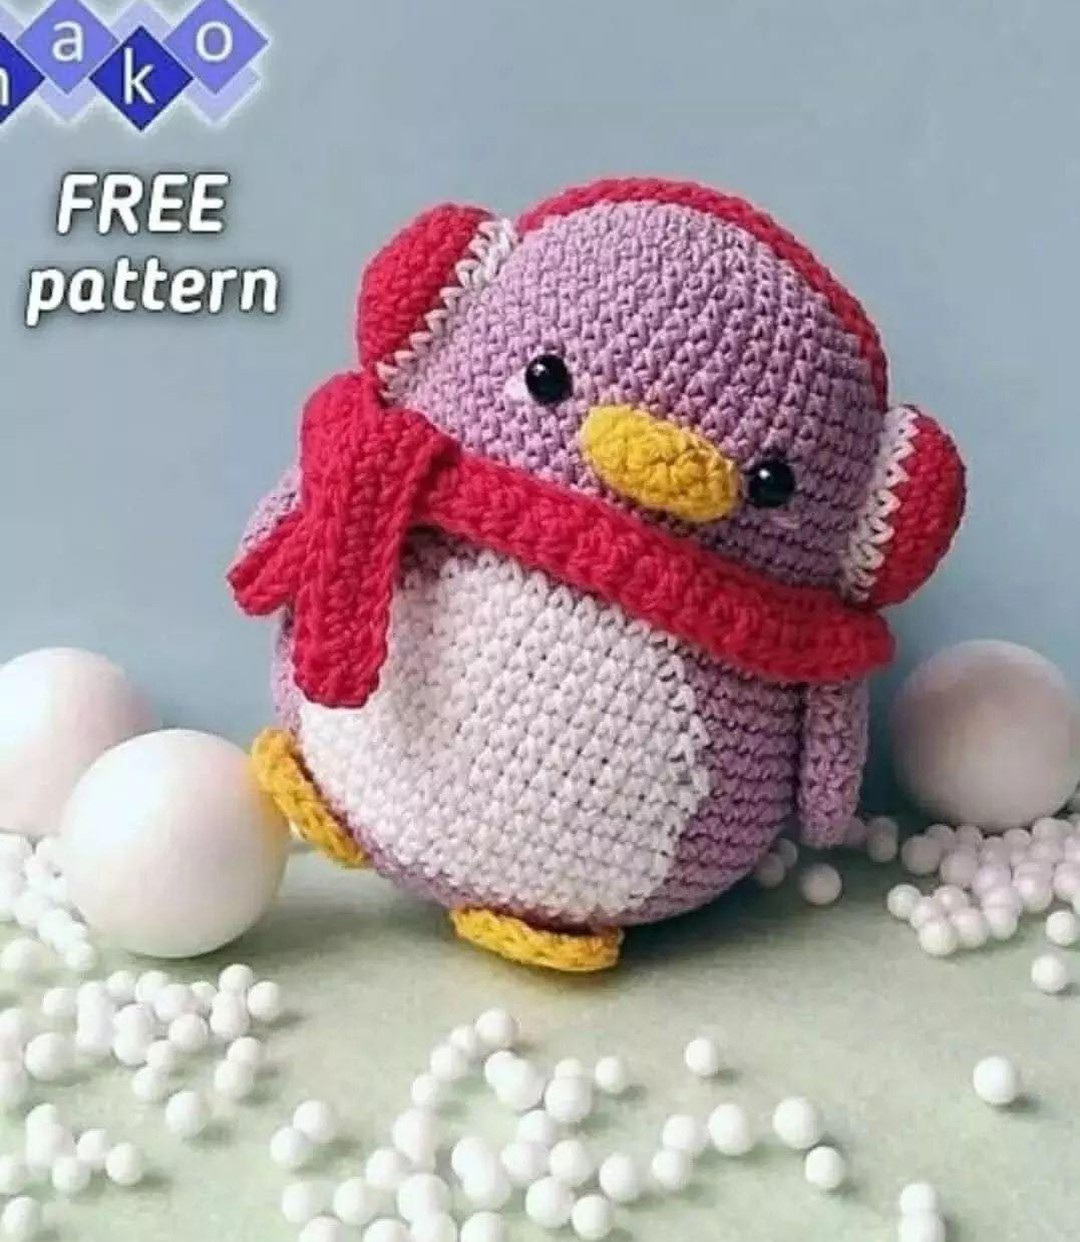 Penguin crochet pattern wearing red headphones